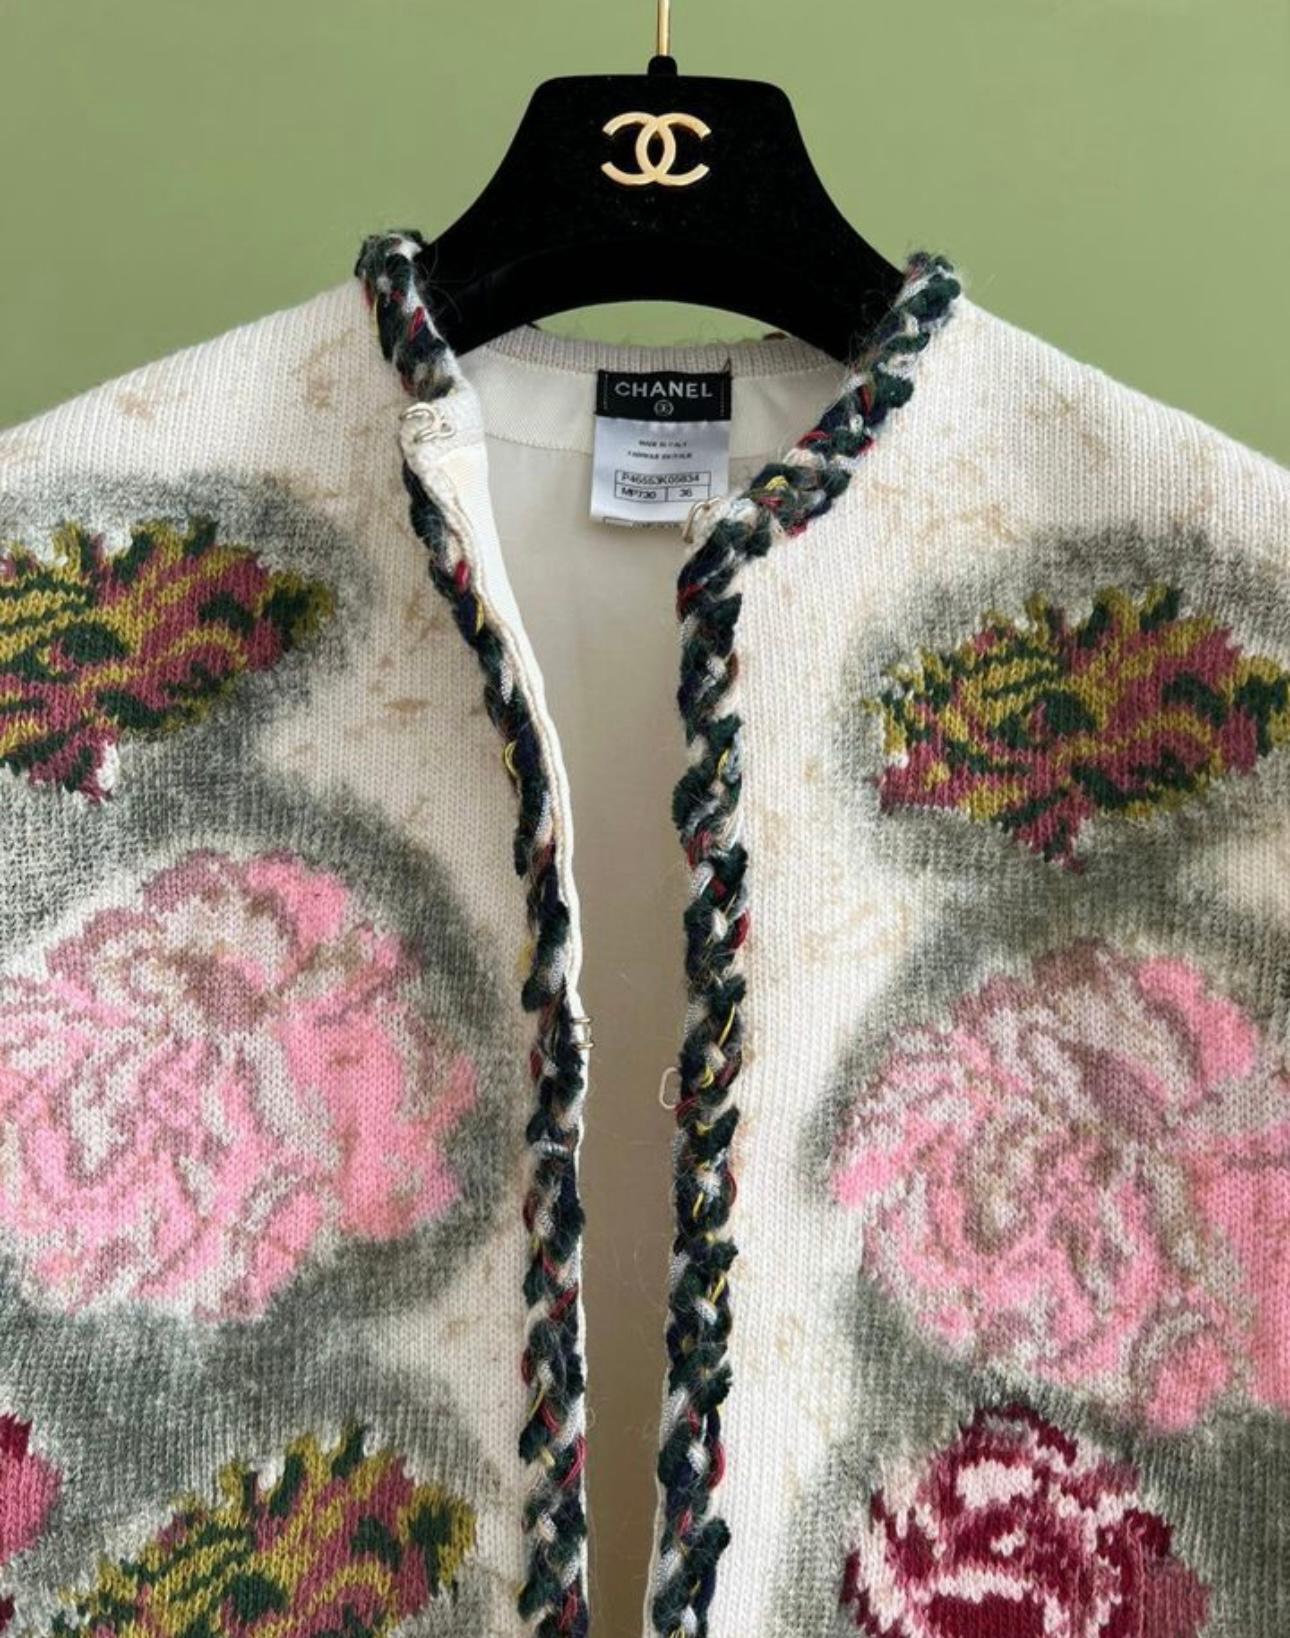 Chanel Paris / Edinburgh Runway Floral Knit Jacket 2